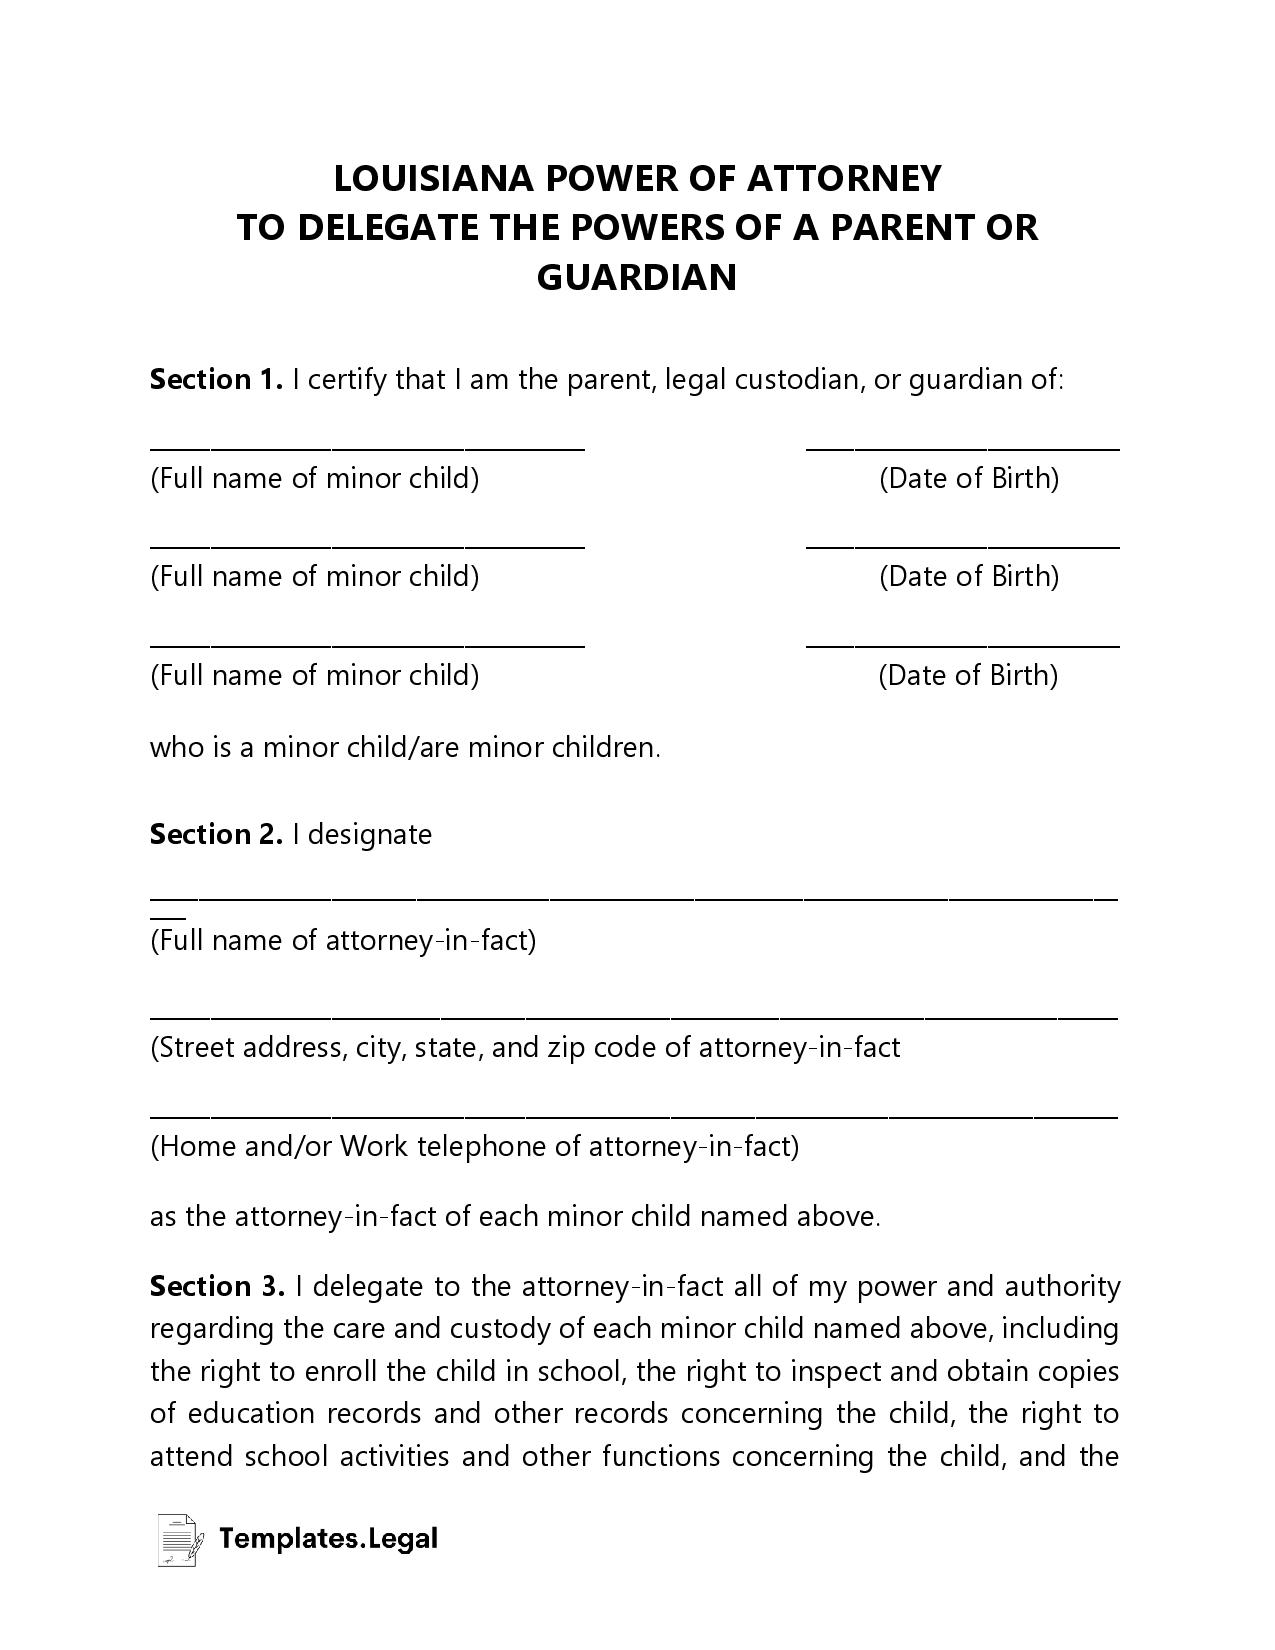 Louisiana Minor (Child) Power of Attorney - Templates.Legal